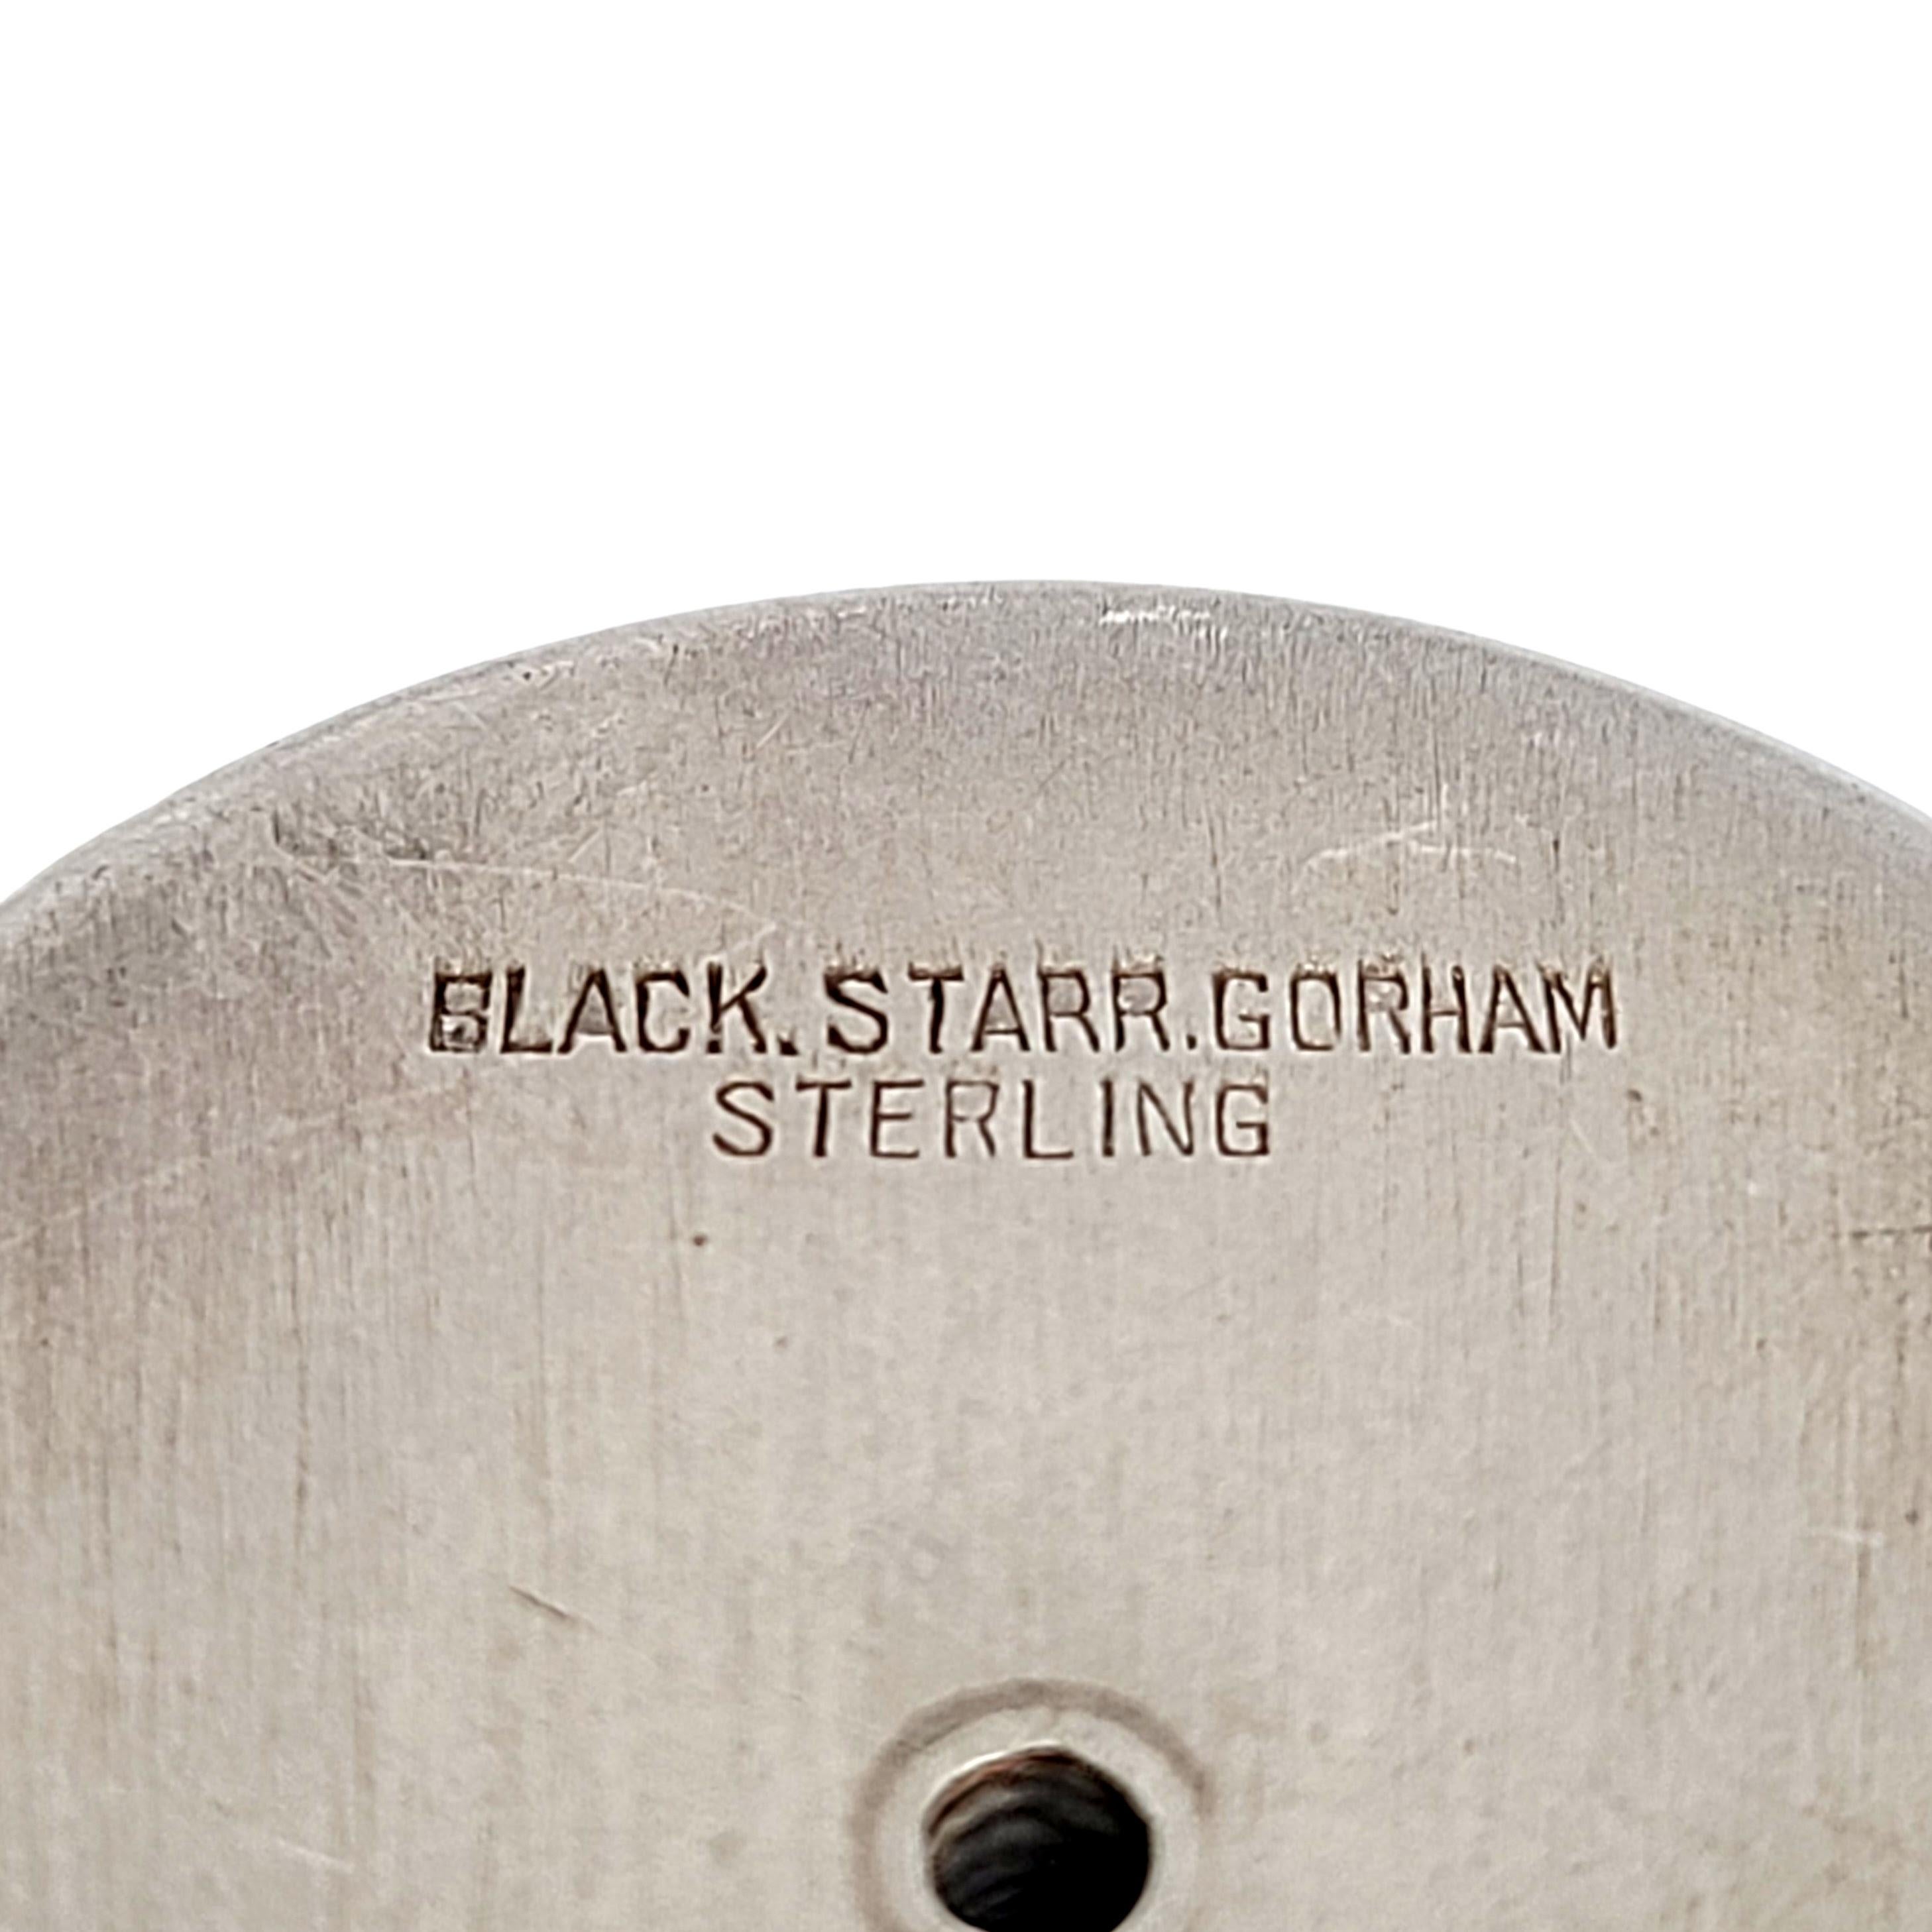 Black Starr Gorham Sterling Silver Tape Measure Holder with Monogram For Sale 1